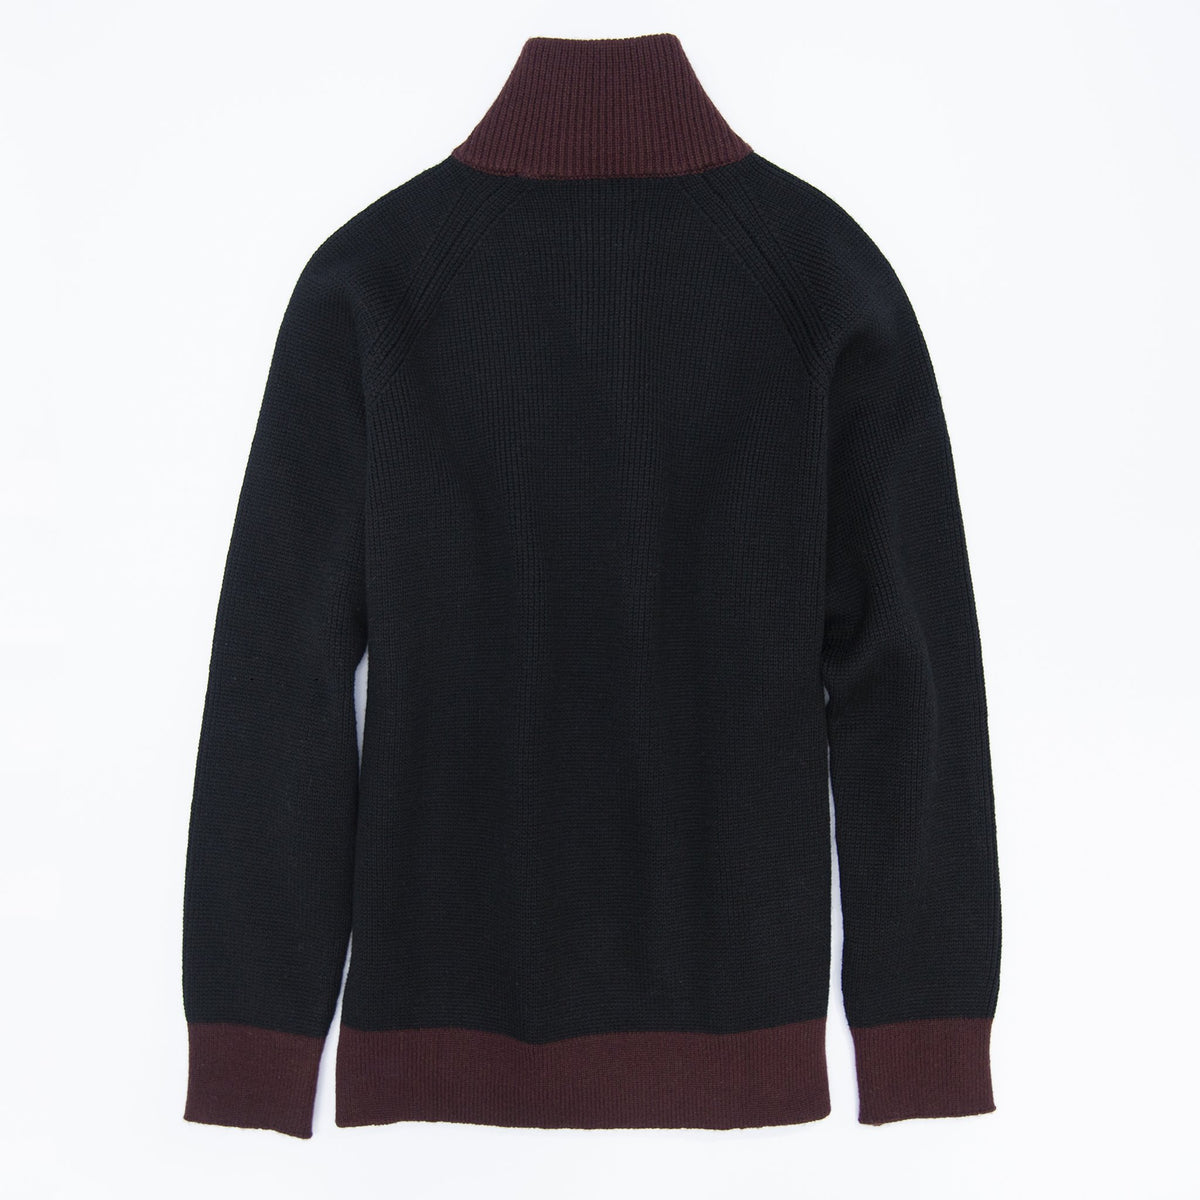 1/4-Zip 3-Ply Sweater - Black / Dark Red knitwear Commonwealth Proper